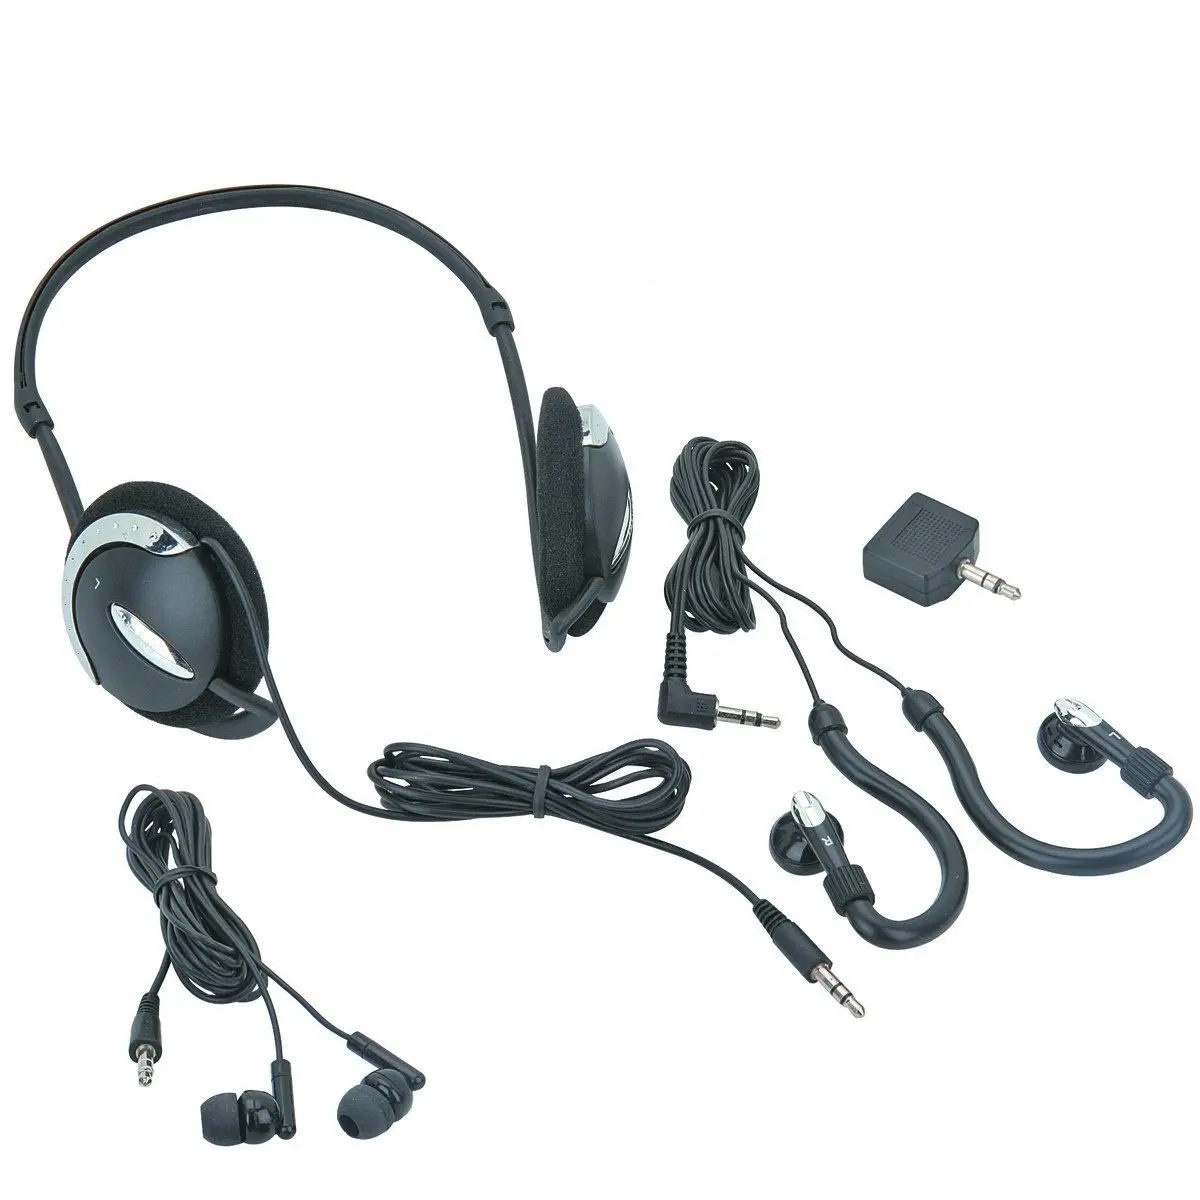 split headphones from dcommand console phones